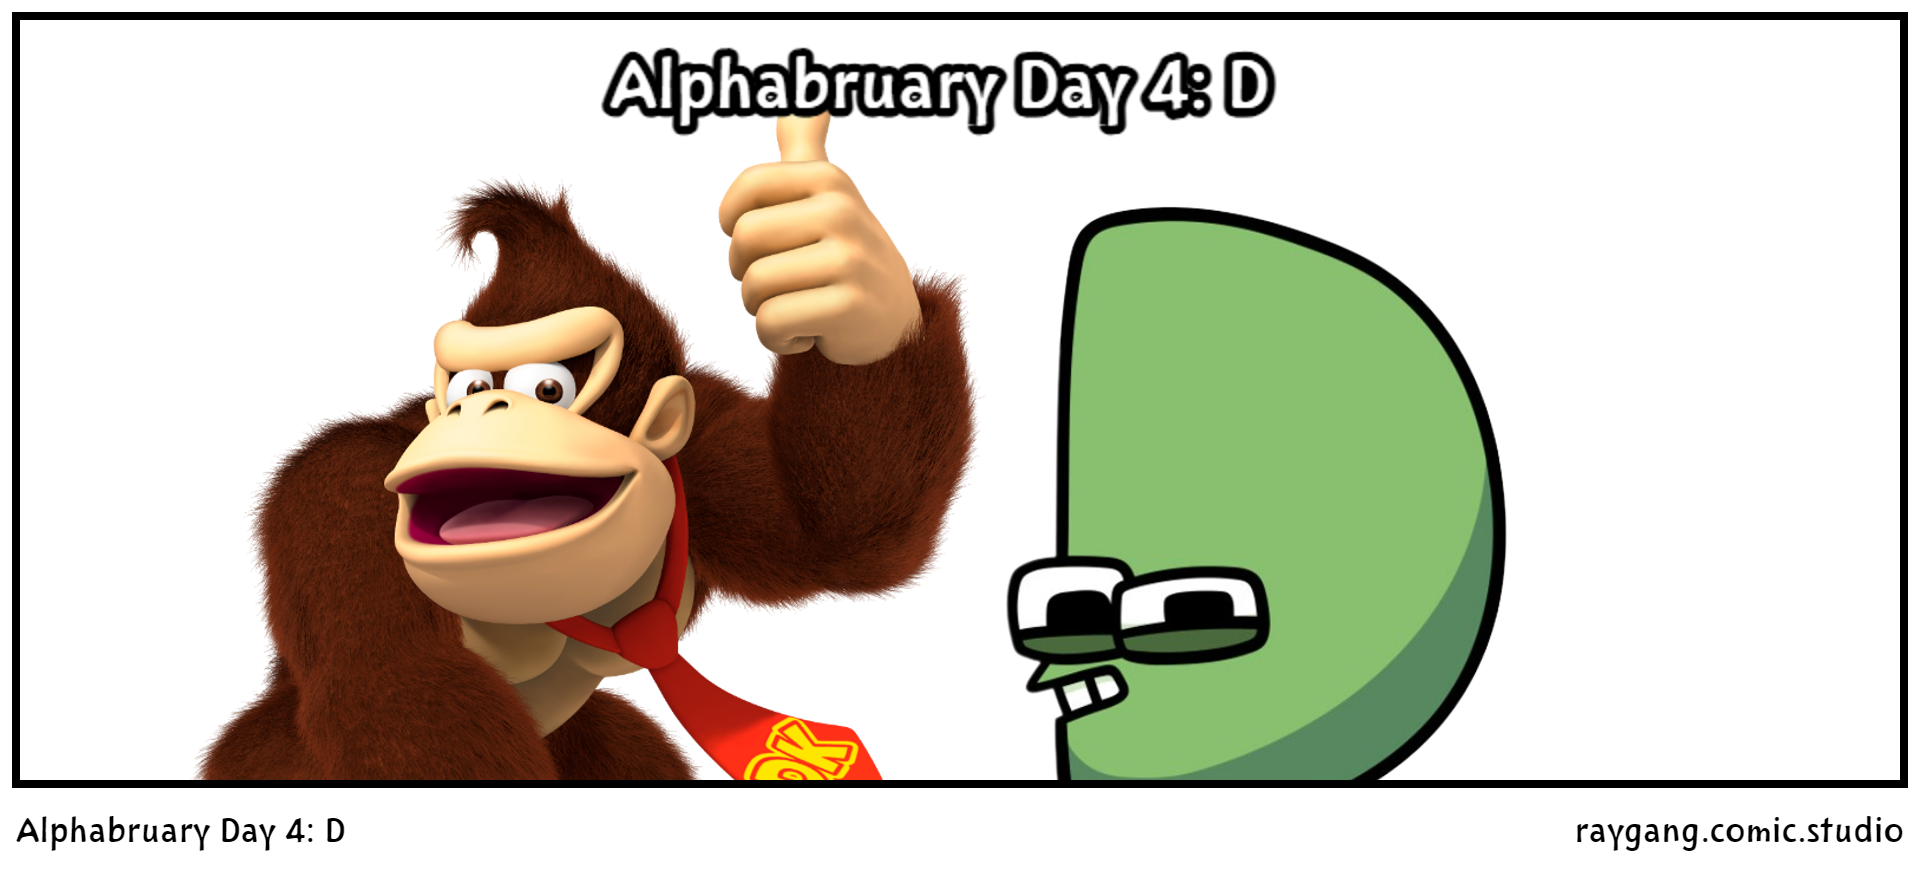 Alphabruary Day 4: D